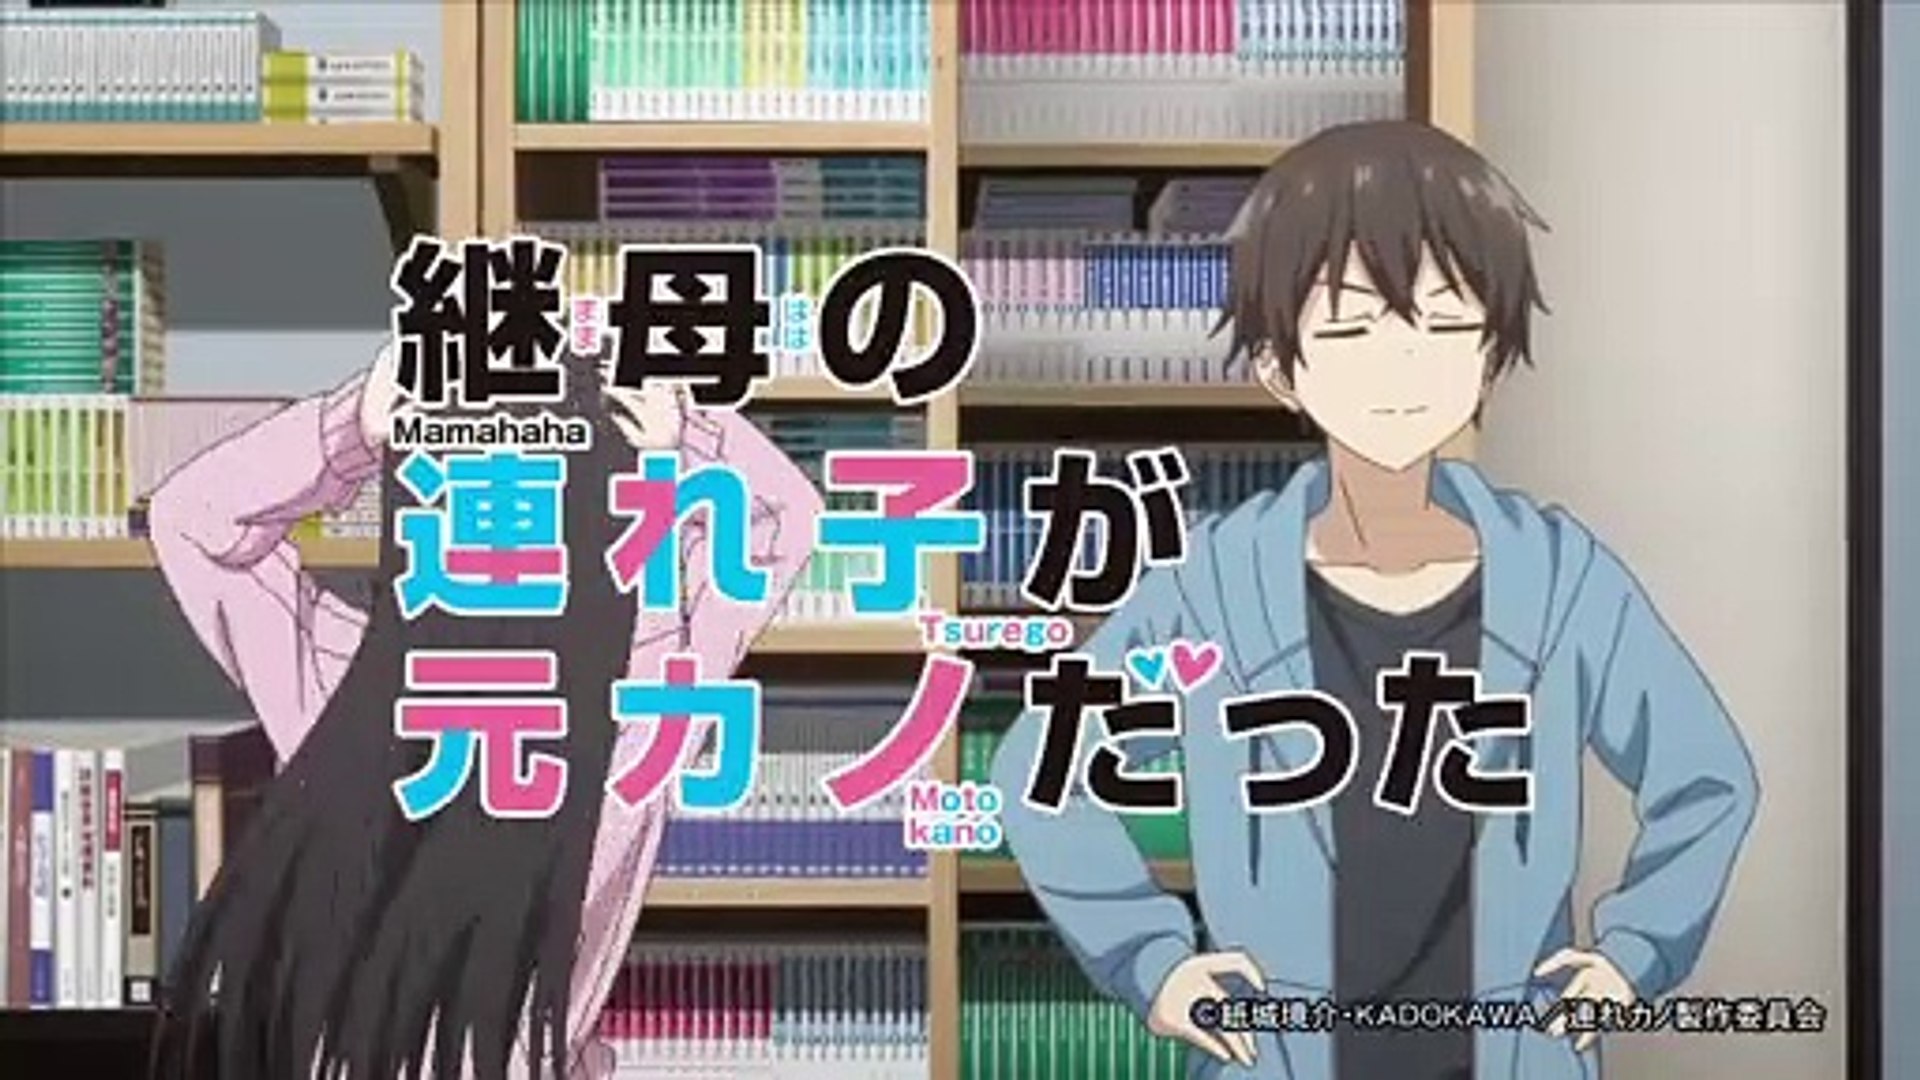 Mamahaha no Tsurego ga Moto Kano Datta TV Anime Slated for 2022